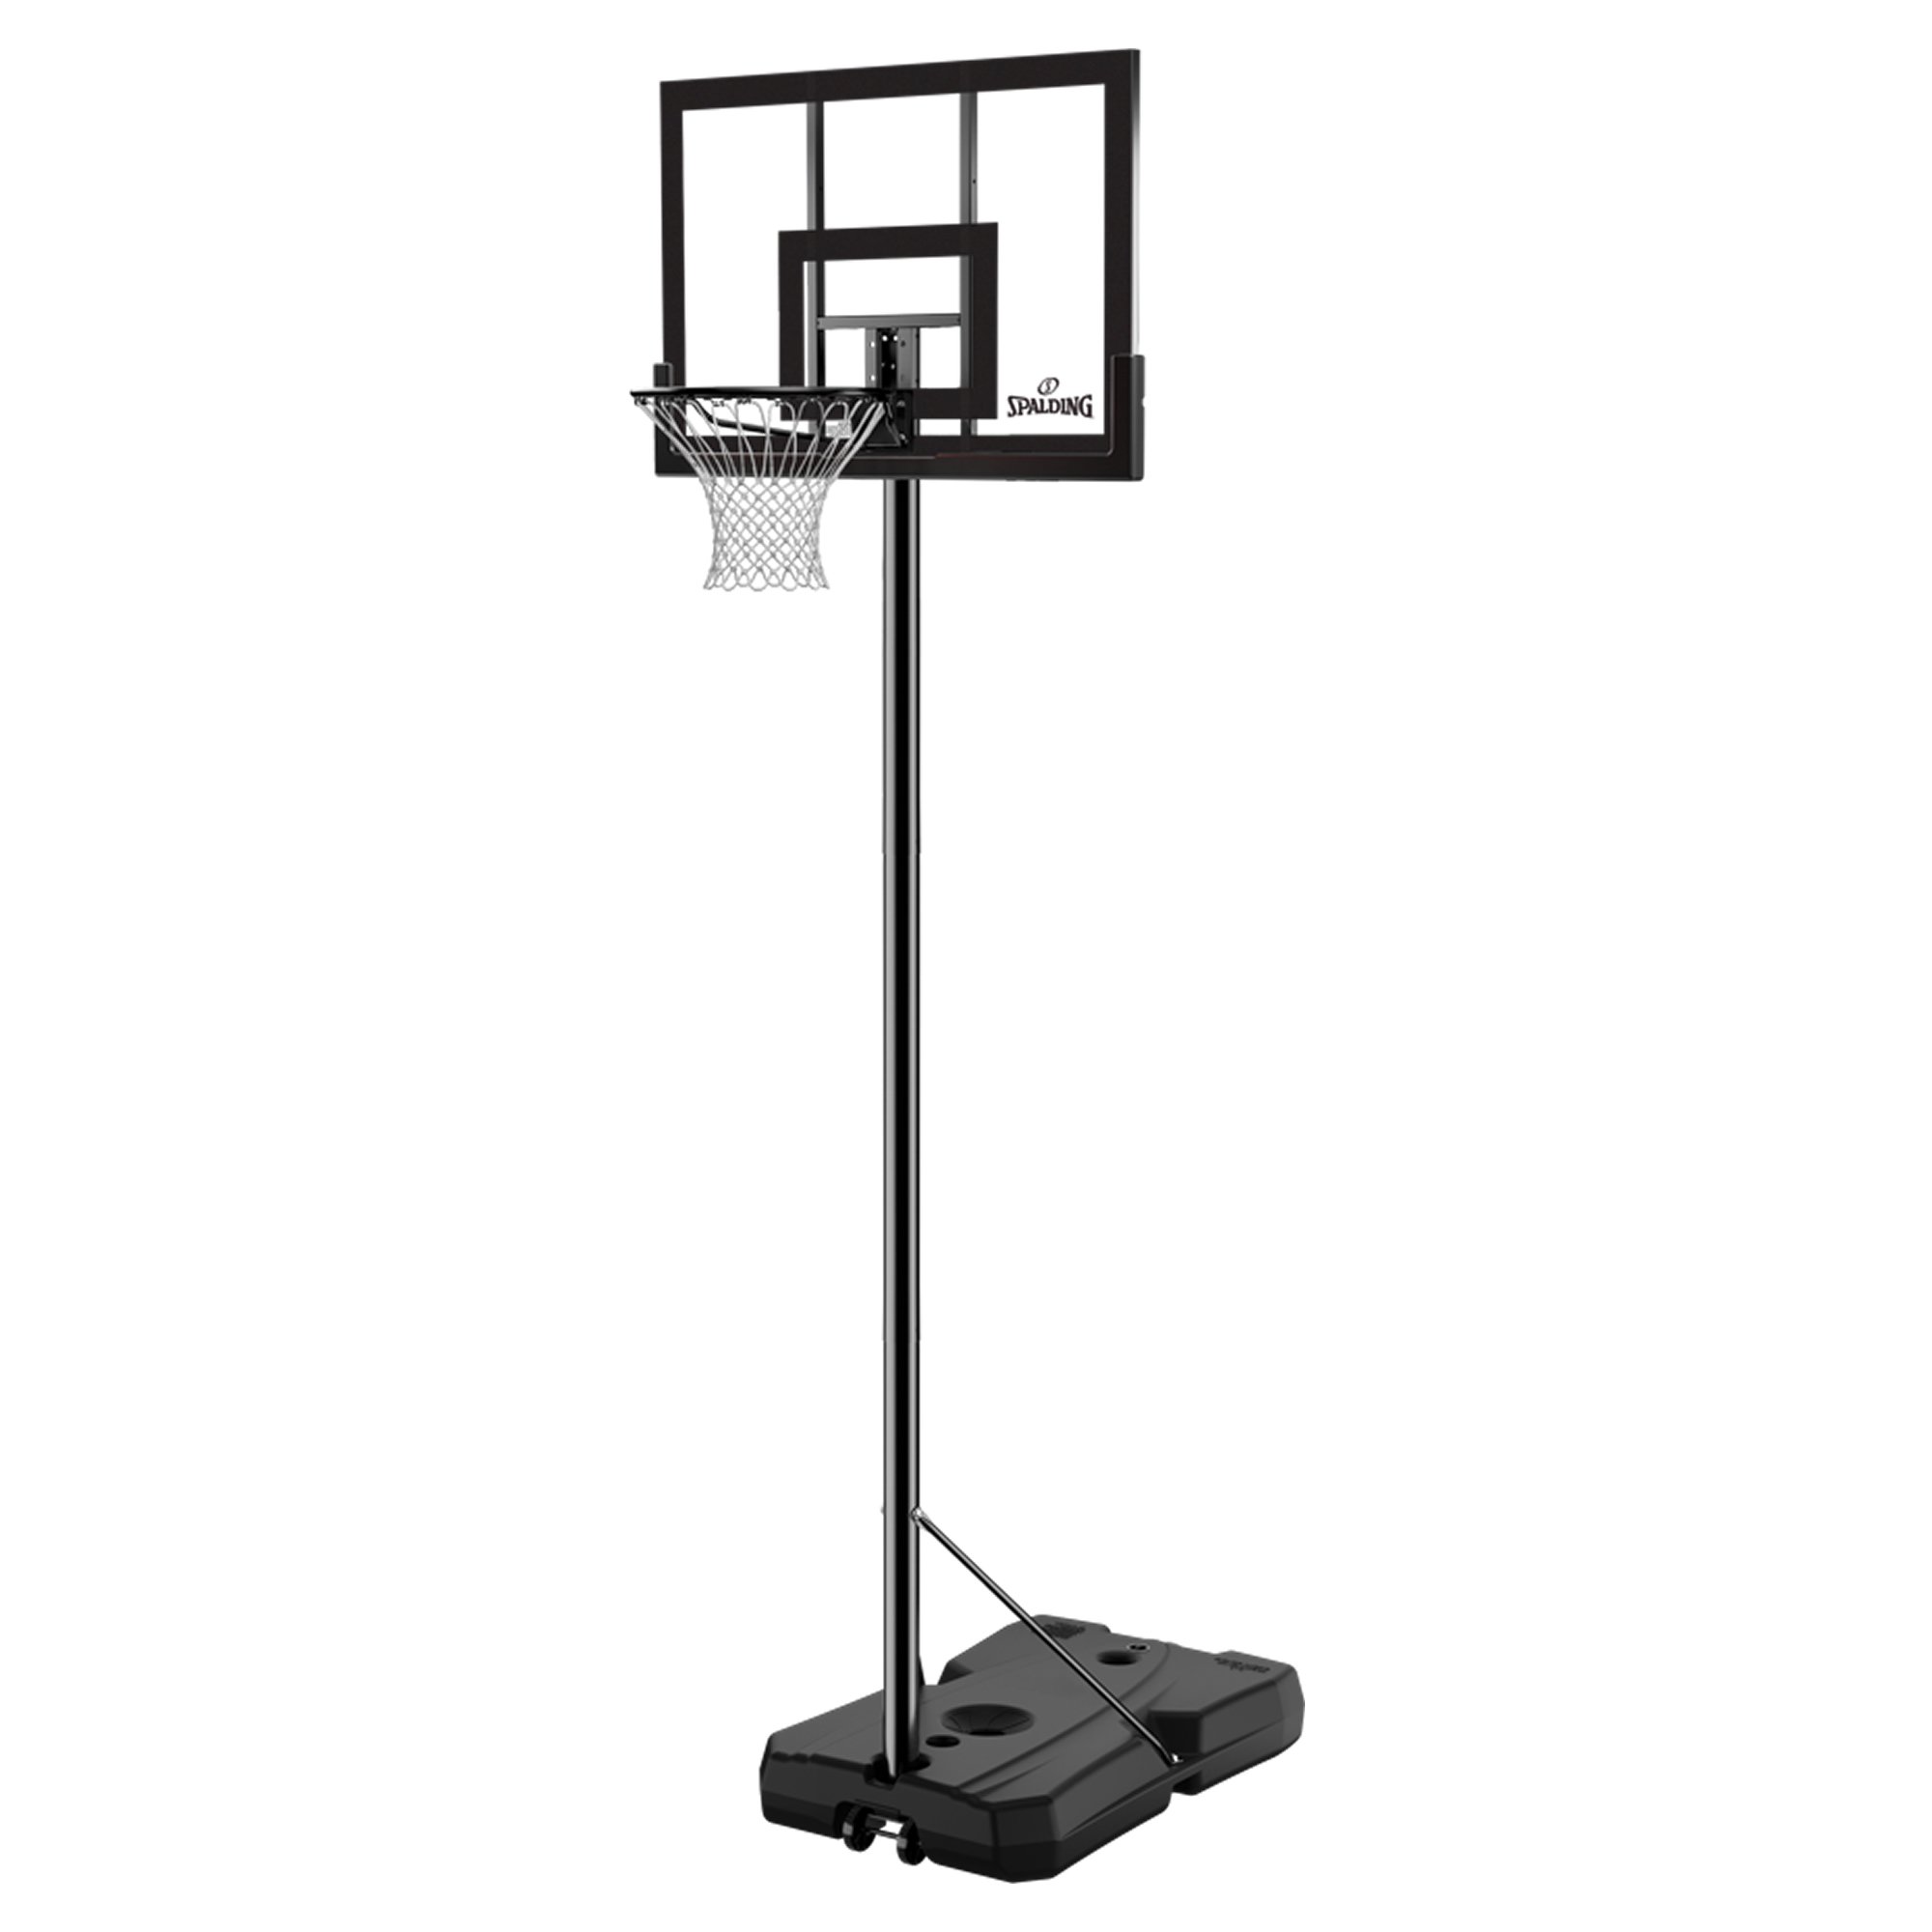 Spalding Highlight Acrylic Portable 42 Basketball Hoop